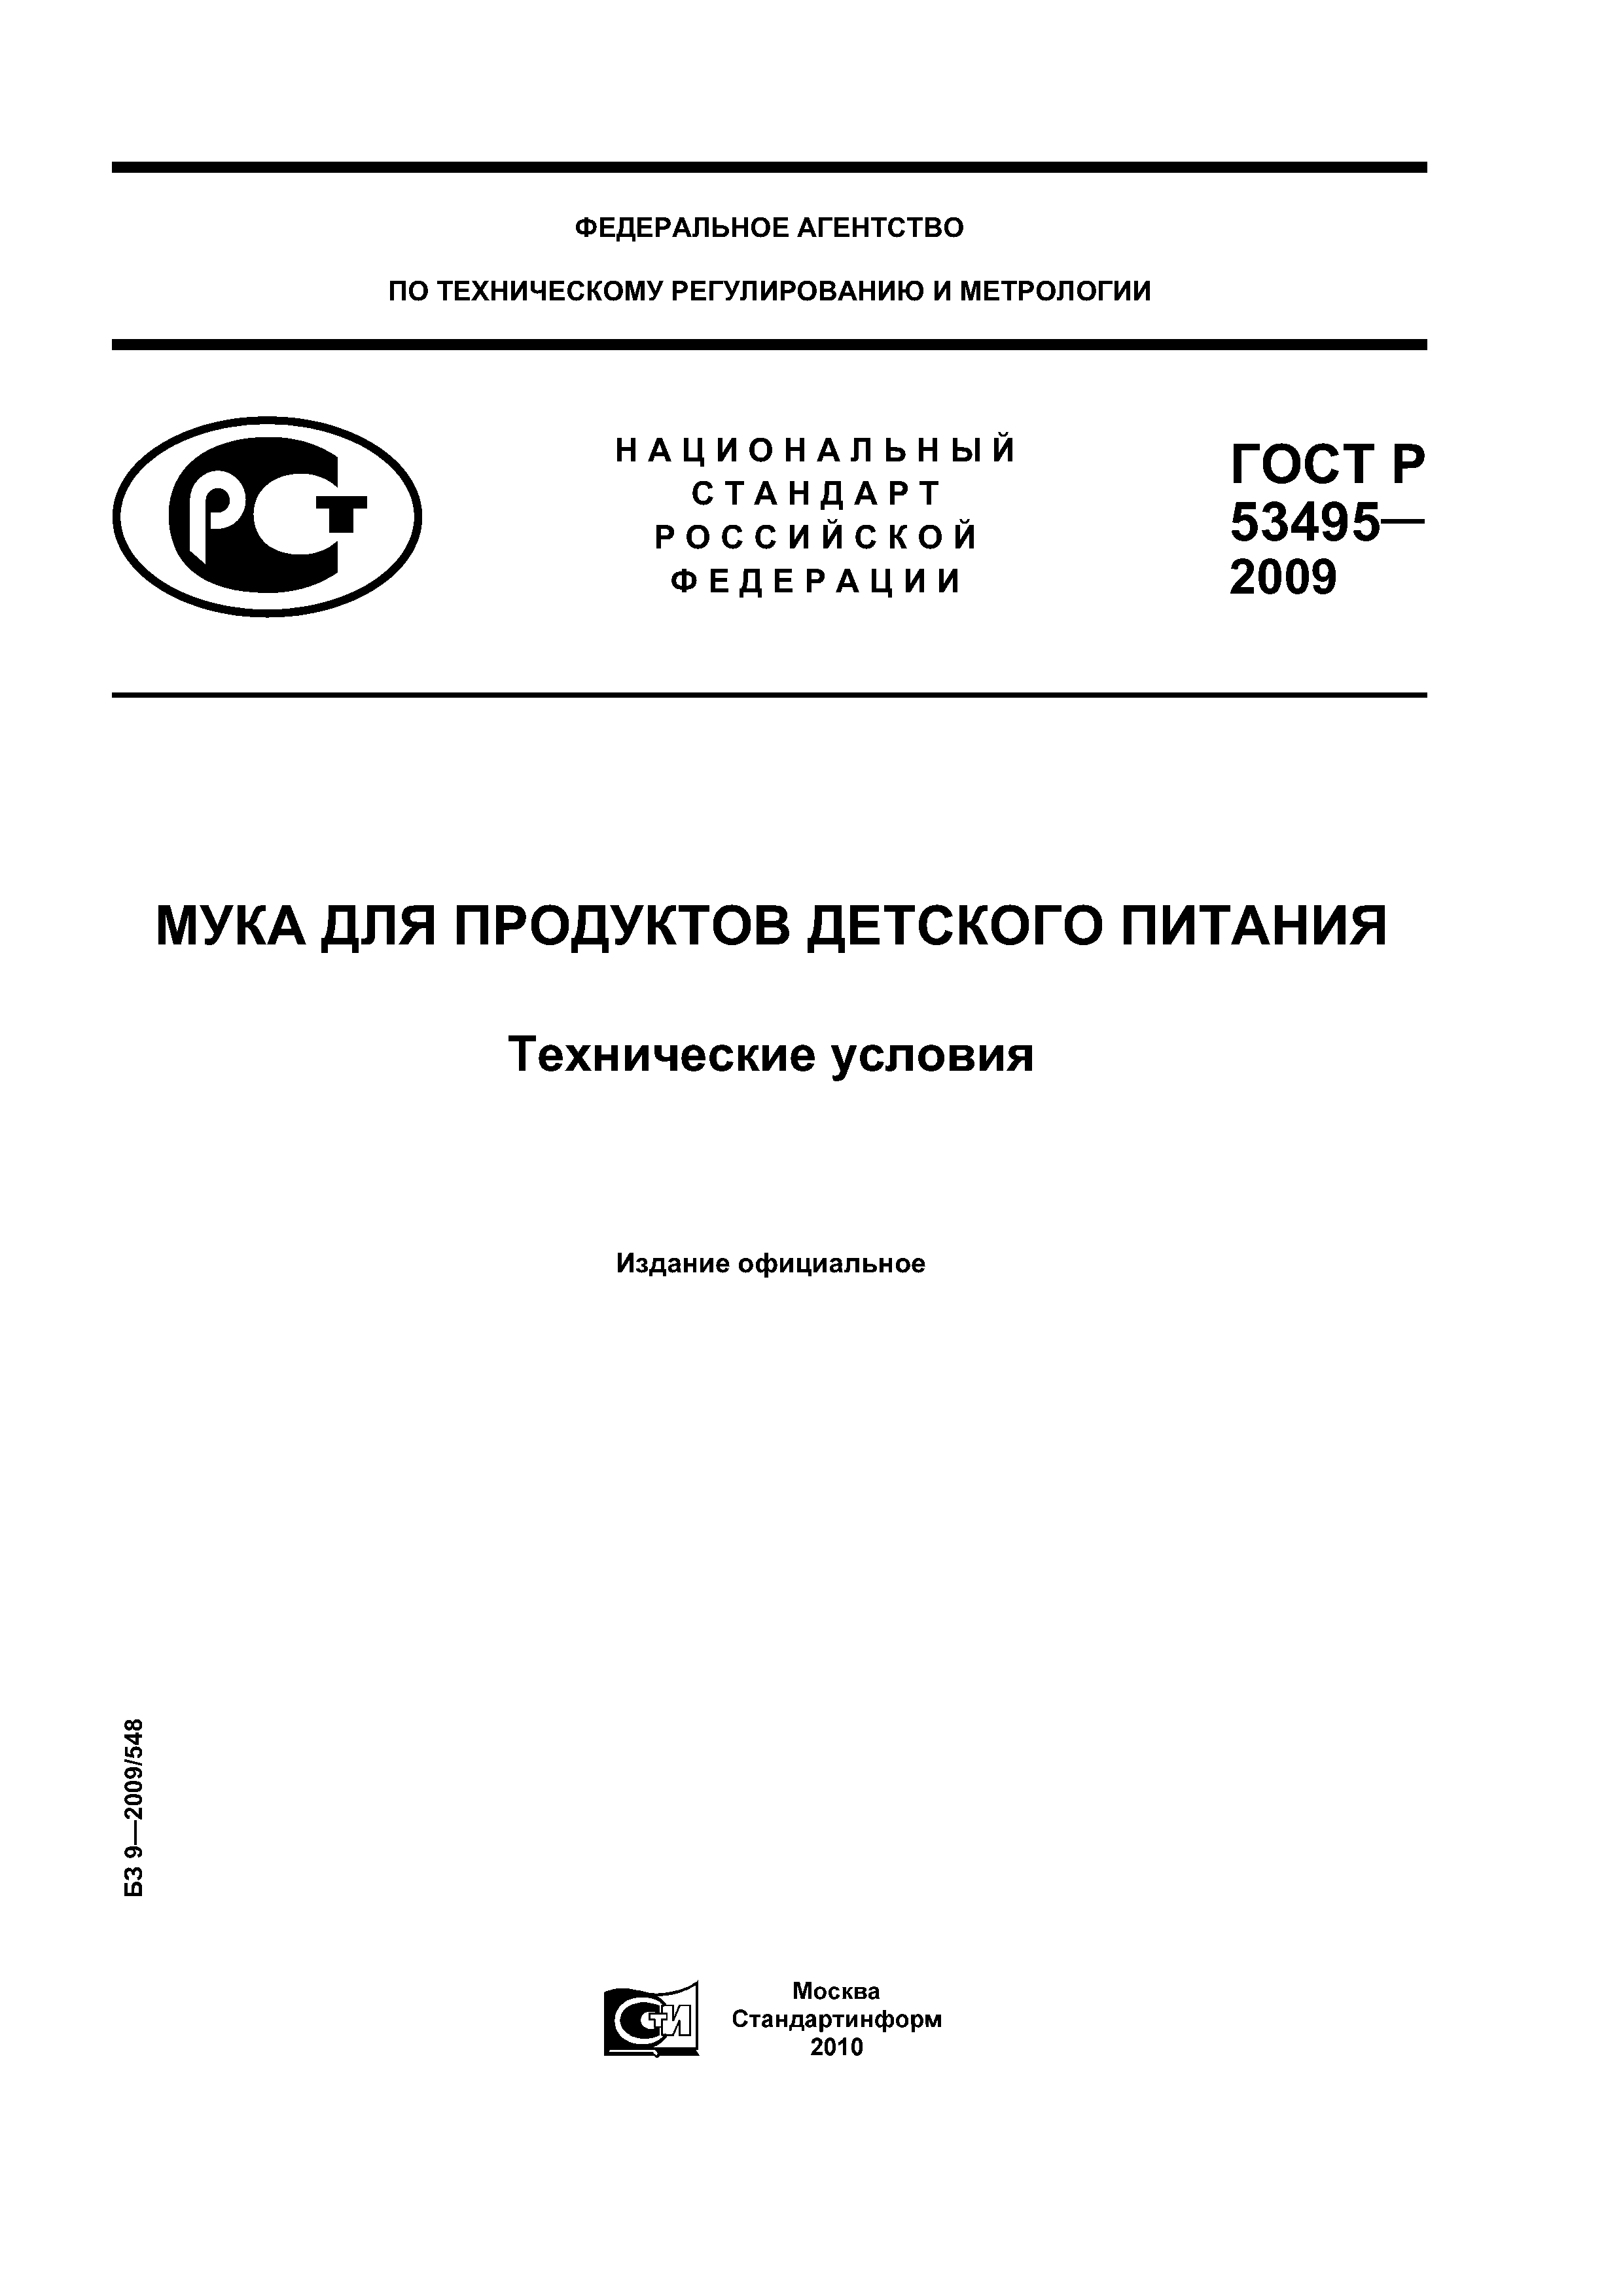 ГОСТ Р 53495-2009